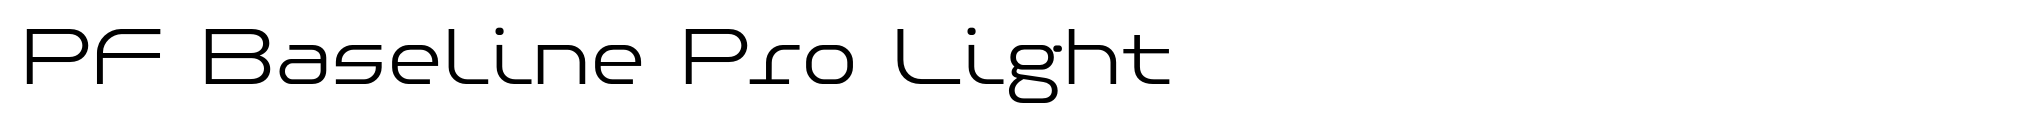 PF Baseline Pro Light image